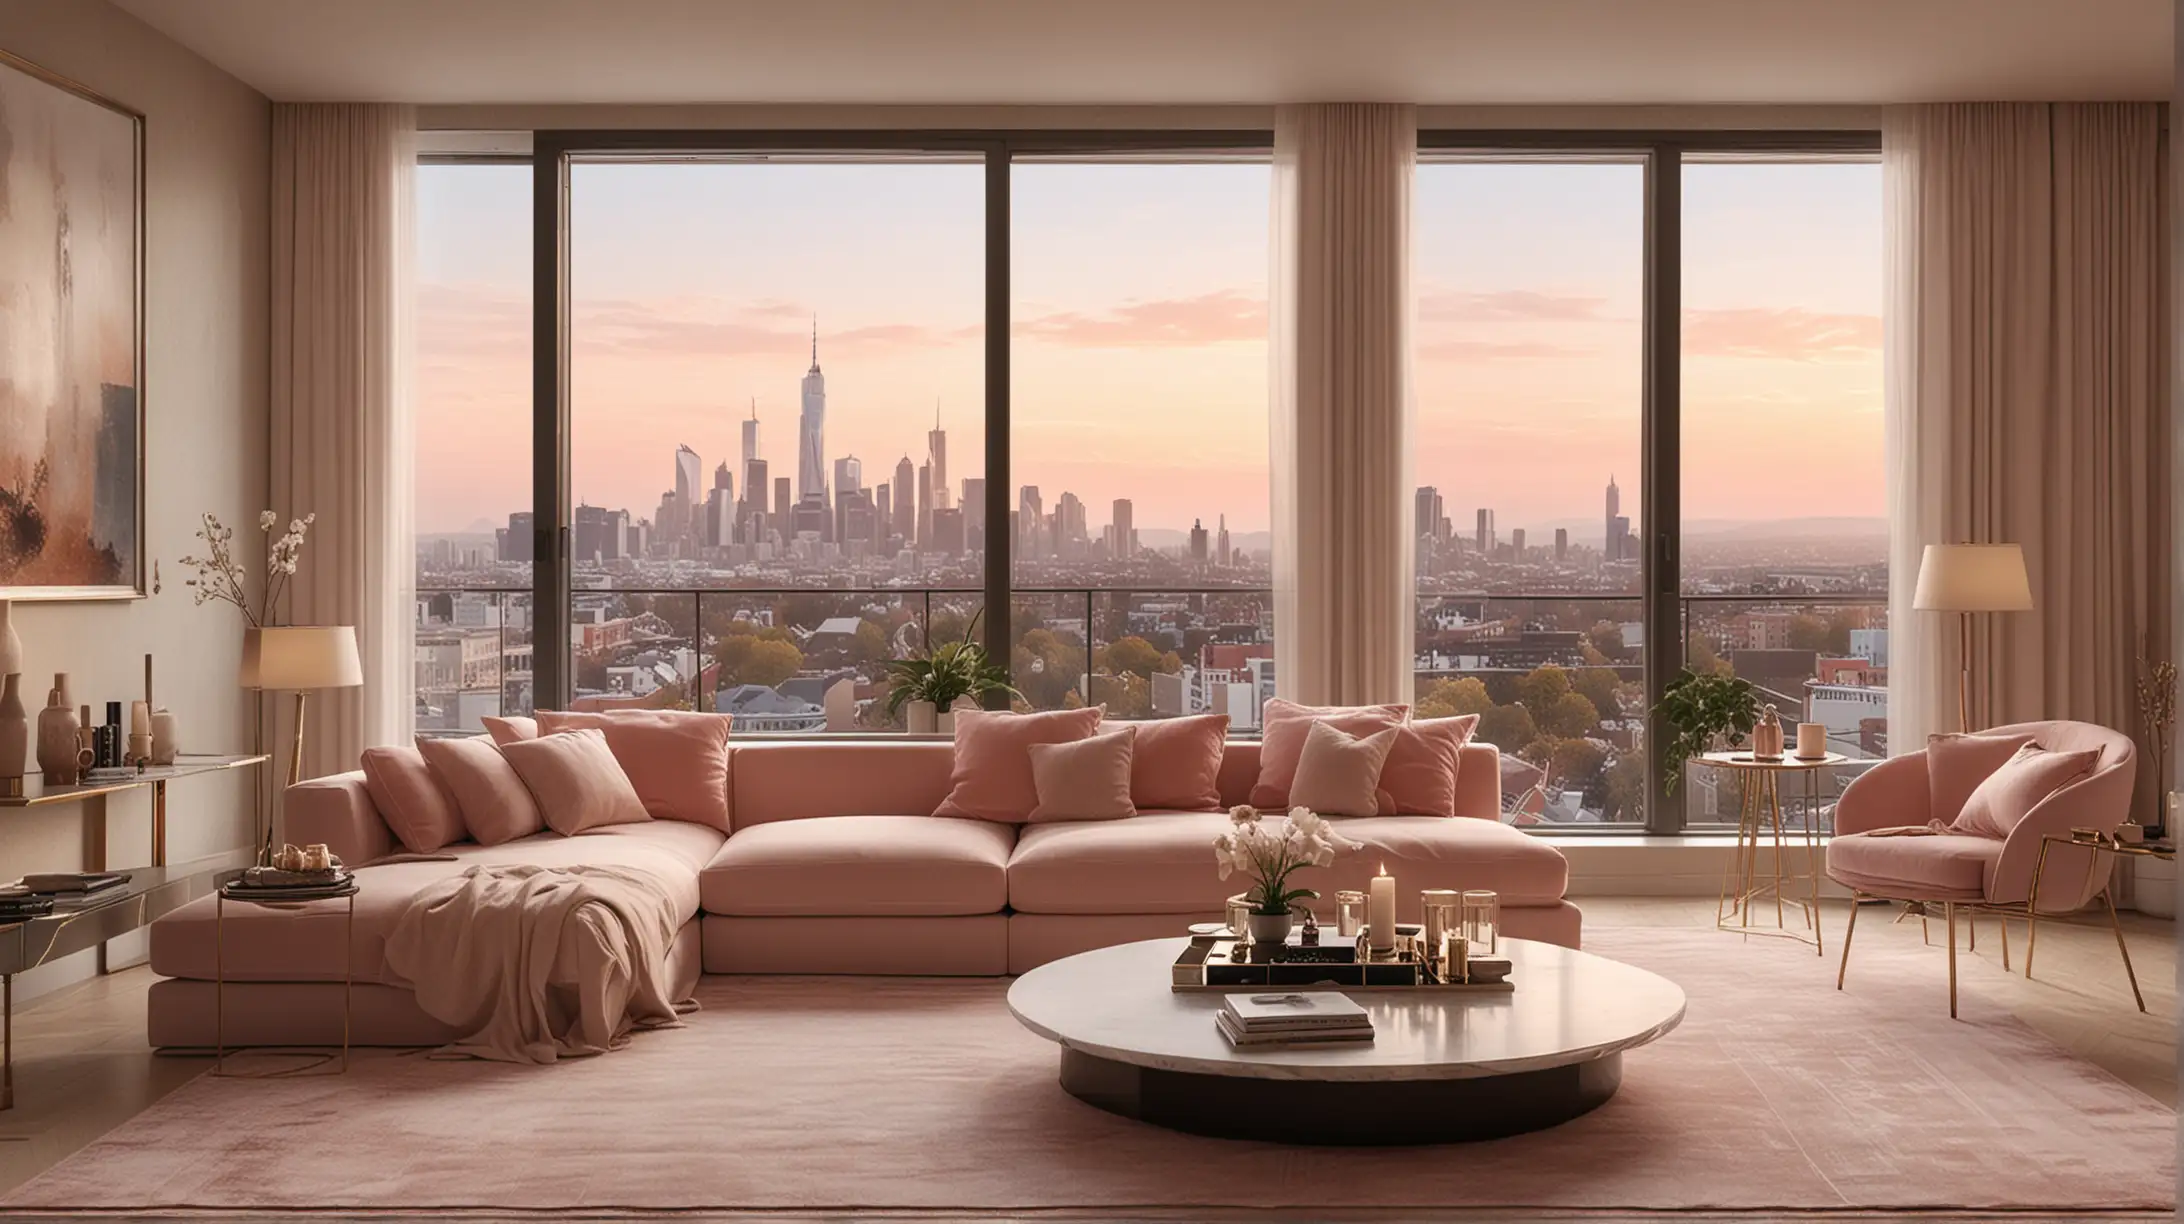 Luxury Sunrise Glow Chic Urban Apartment with Blush Pink Tones